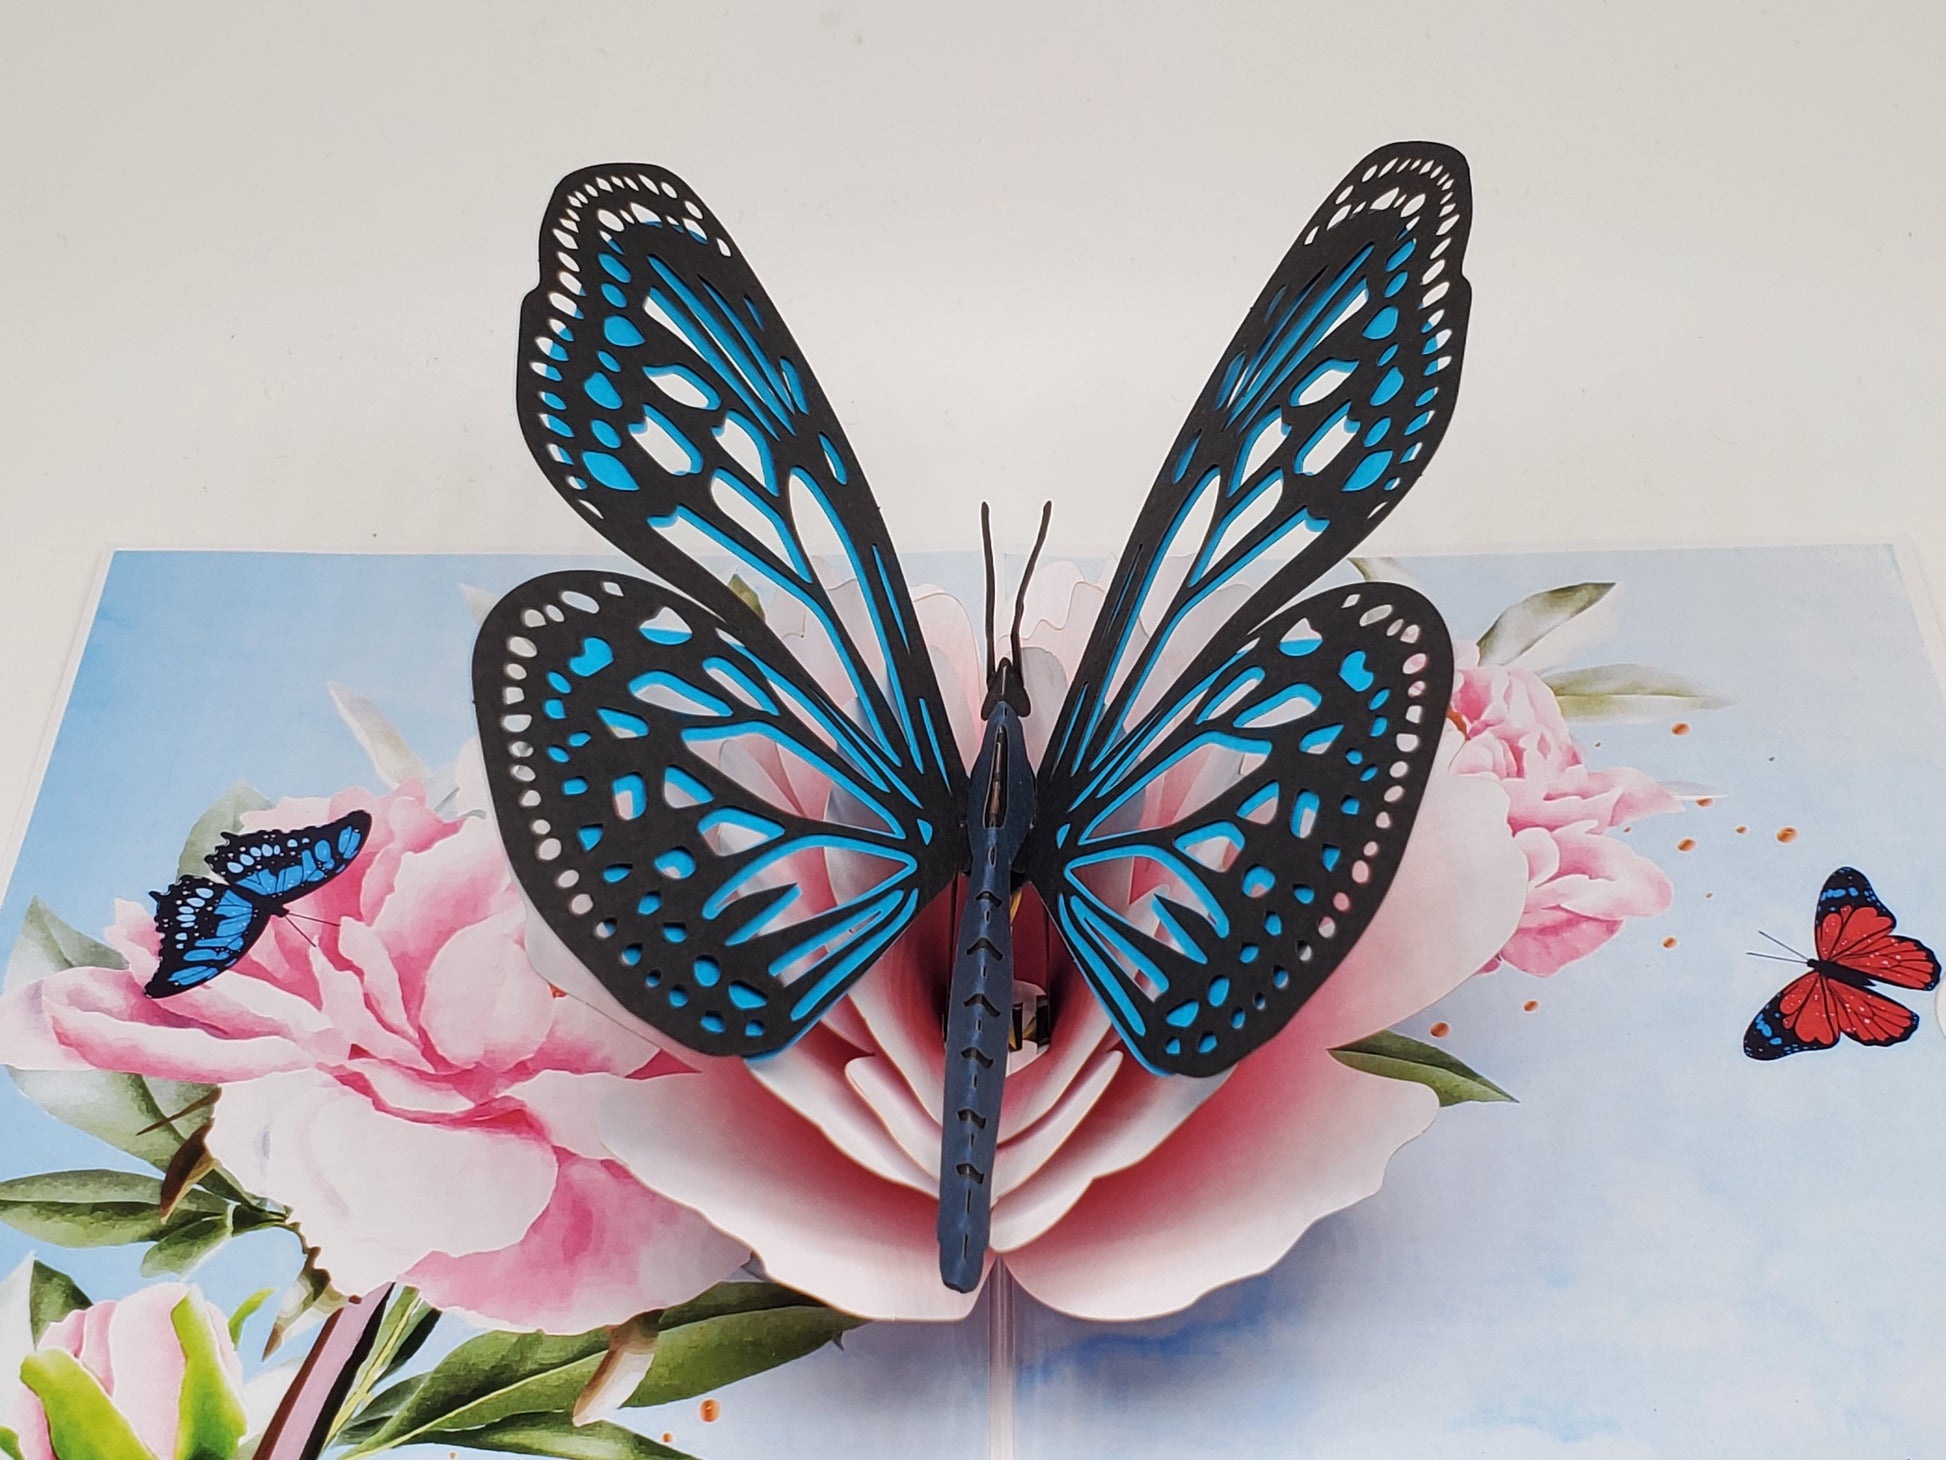 Butterfly on Flower 3D Pop Up Card